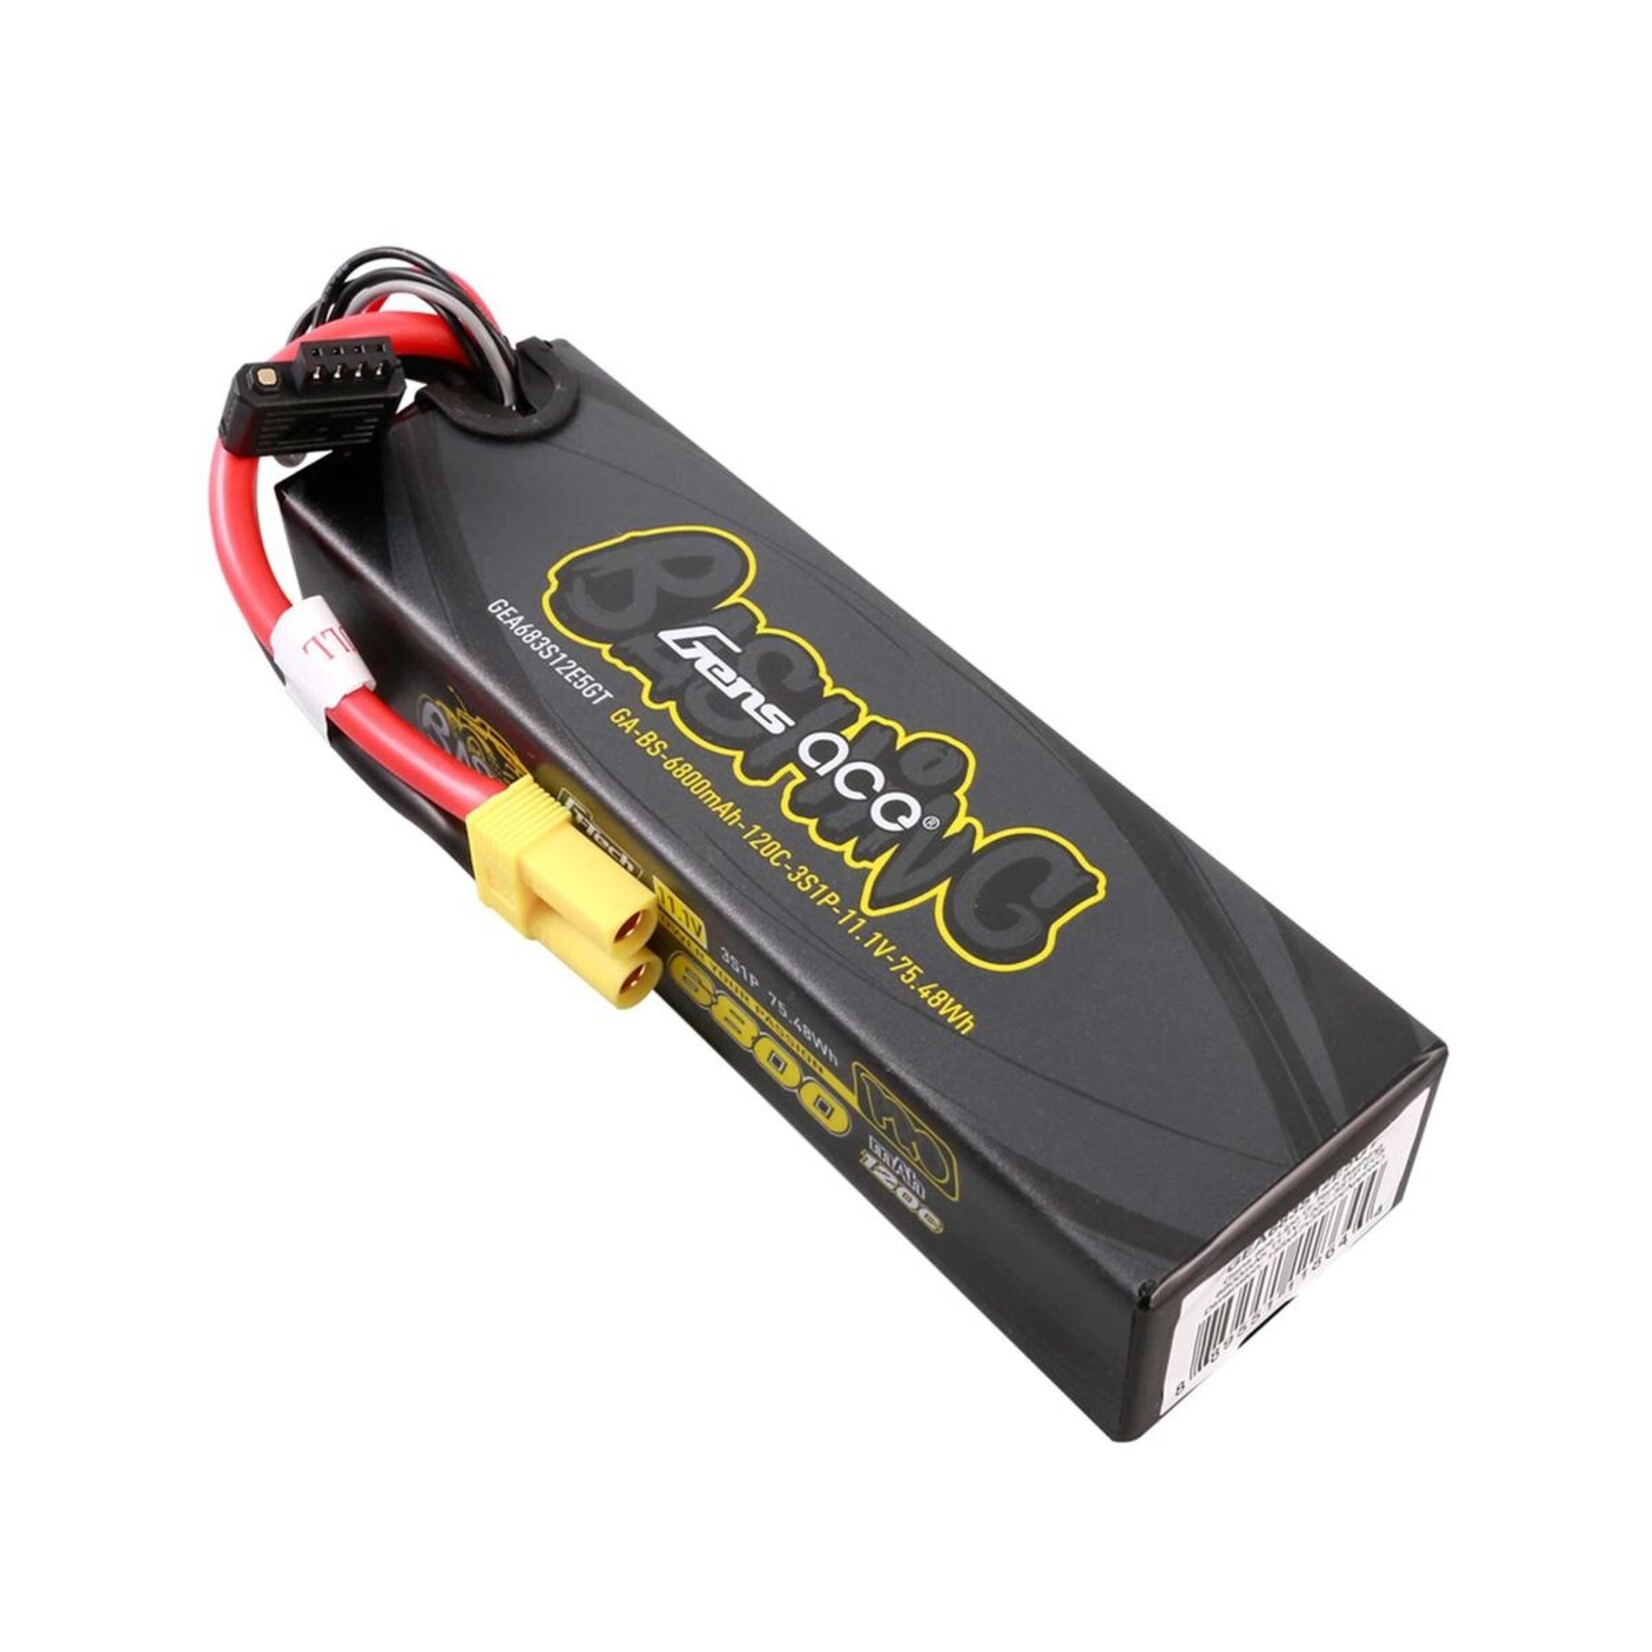 Gens Ace Gens Ace G-Tech Smart 3S Bashing Series Hardcase LiPo Battery 120C (11.1V/6800mAh) w/EC5 Connector #GEA683S12E5GT